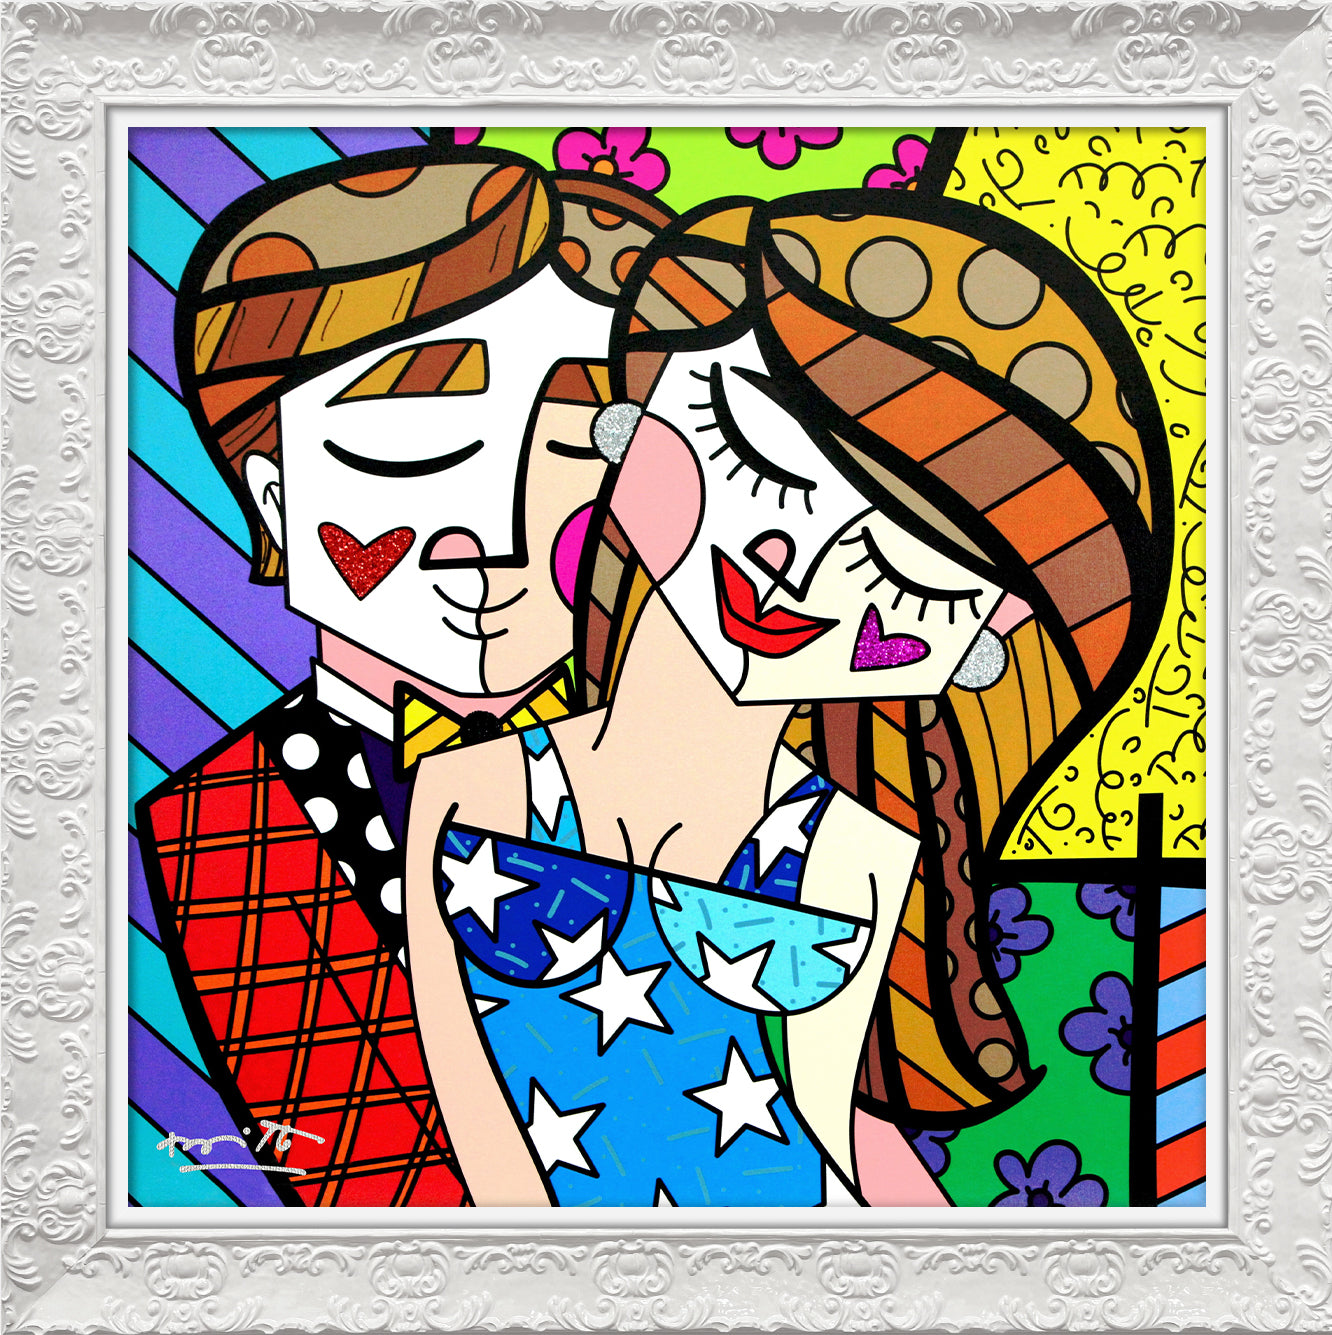 Cute Couple Drawings for Sale - Fine Art America